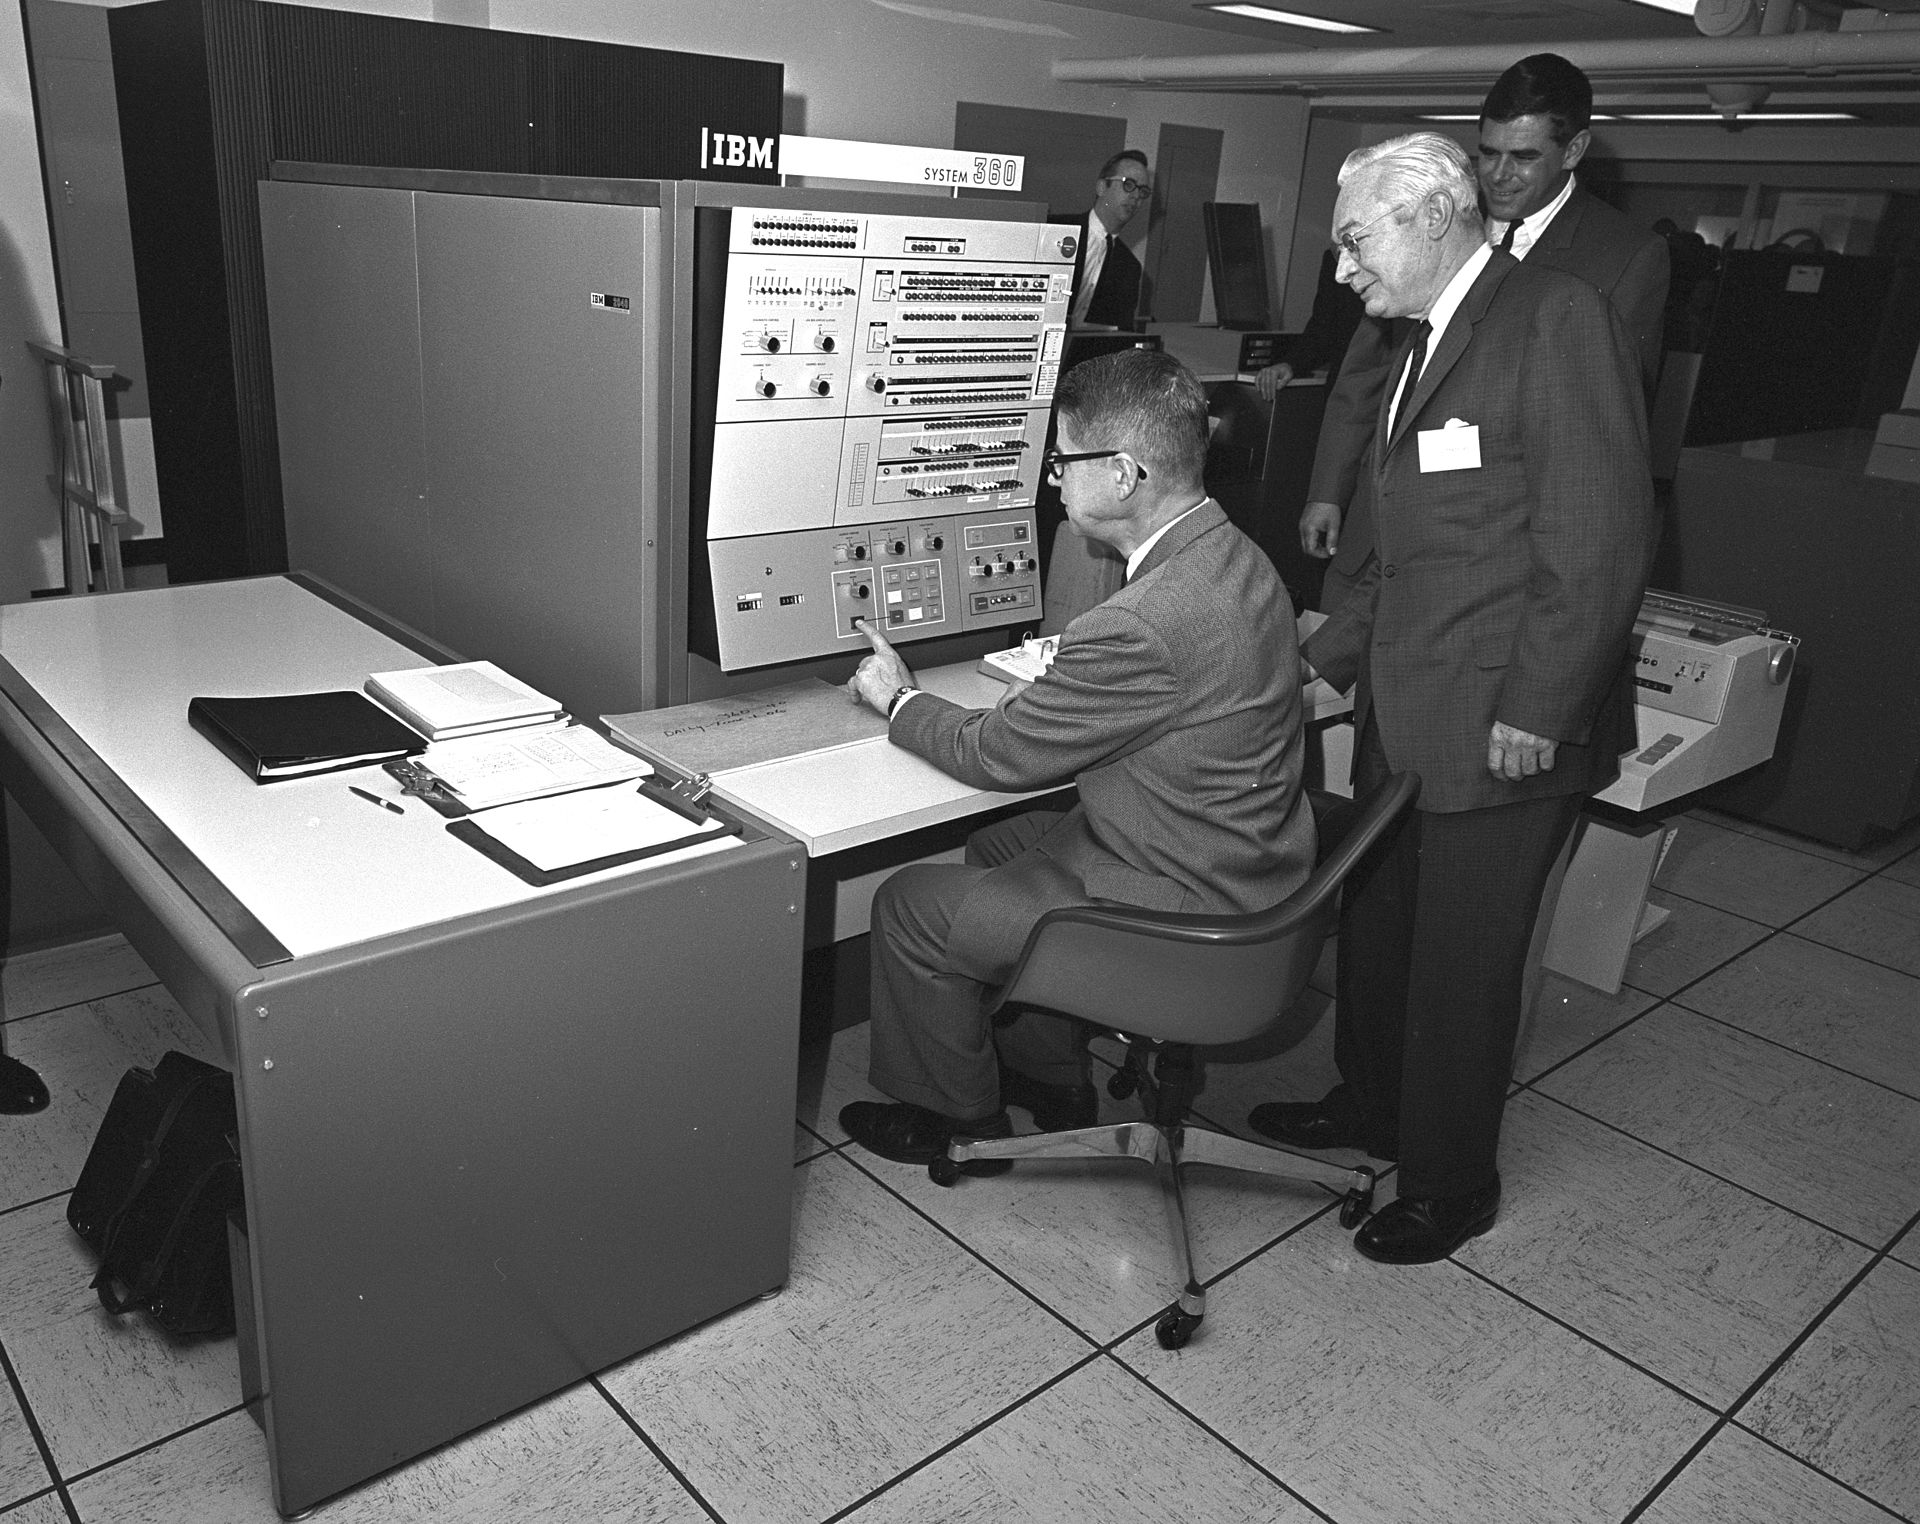 The IBM System/360